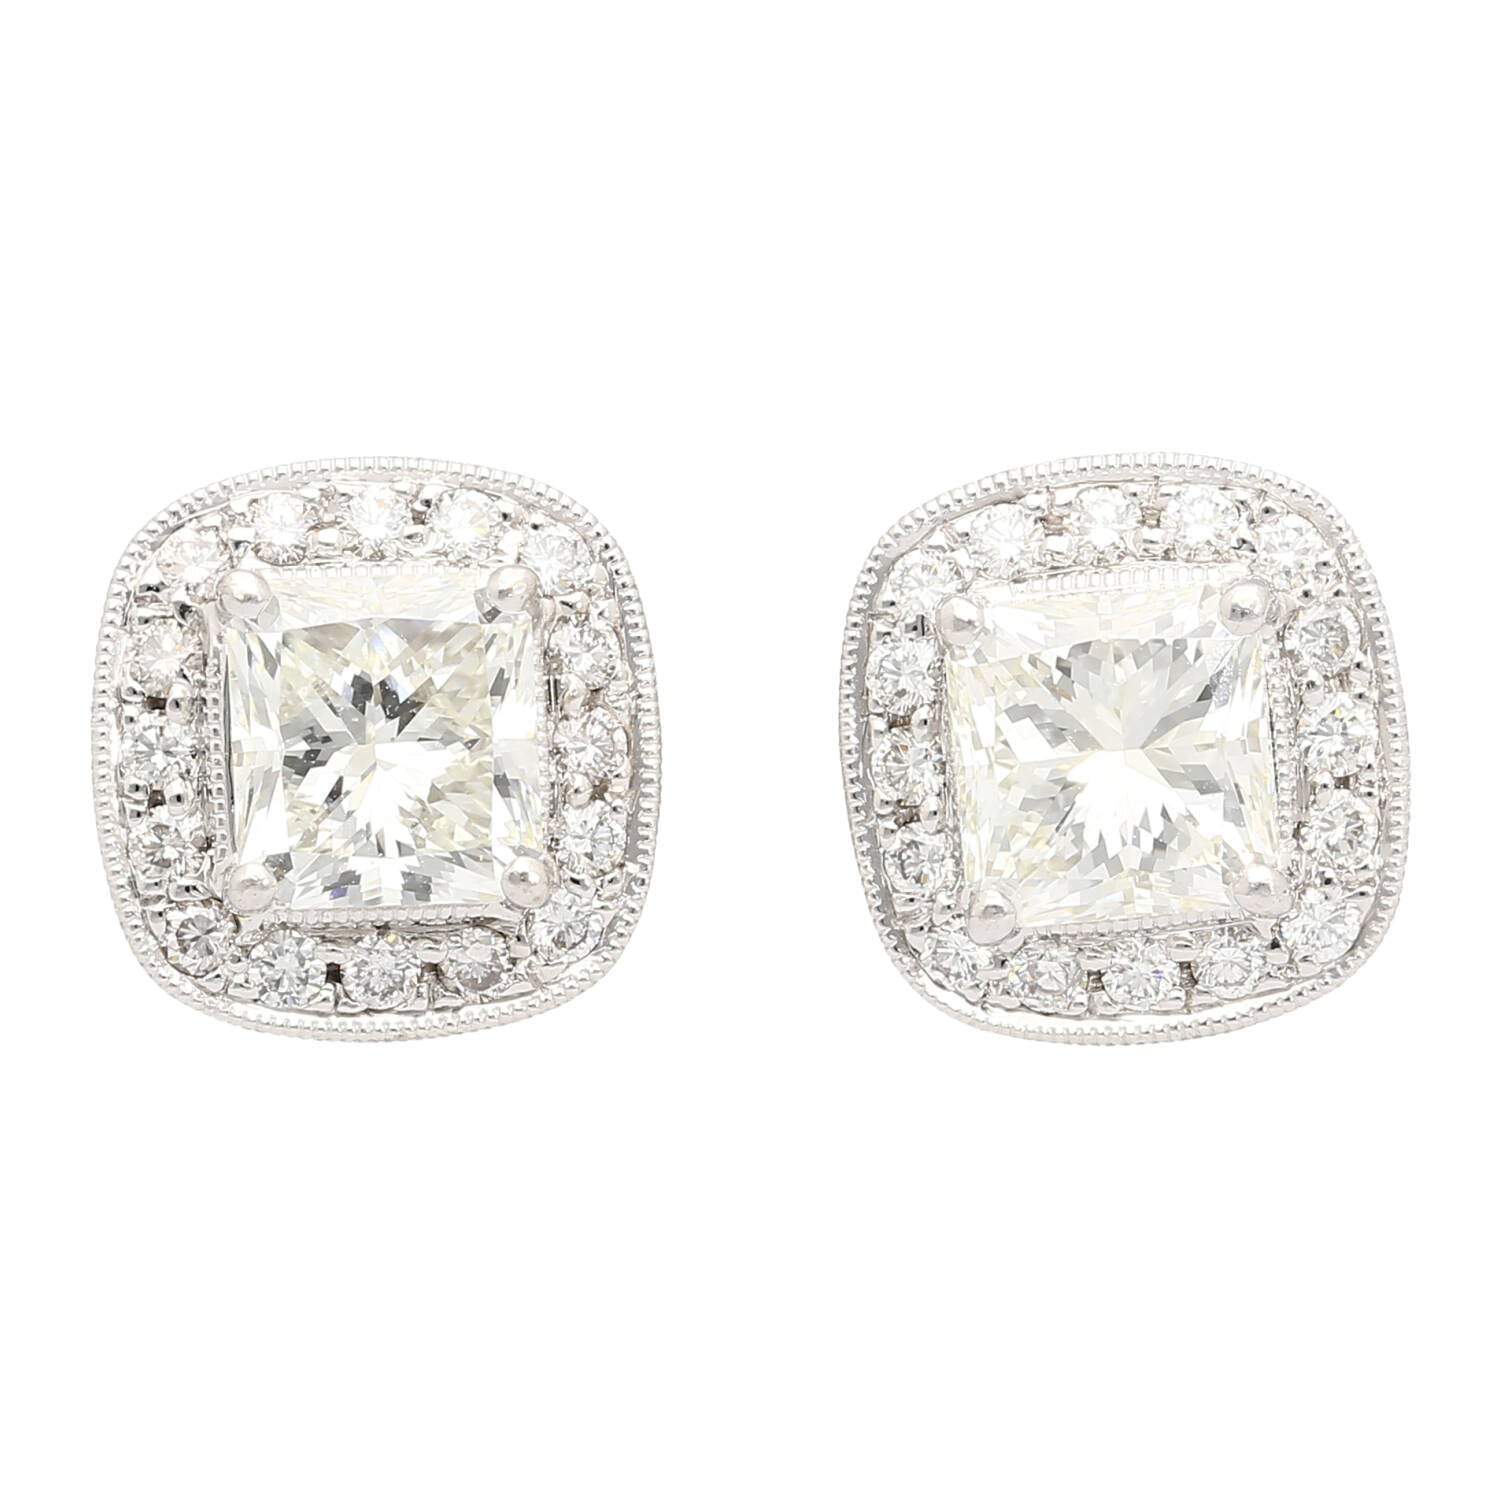 GIA-Certified-3-Carat-Total-Radiant-Cut-Diamond-Stud-Earrings-in-18K-White-Gold-Earrings.jpg